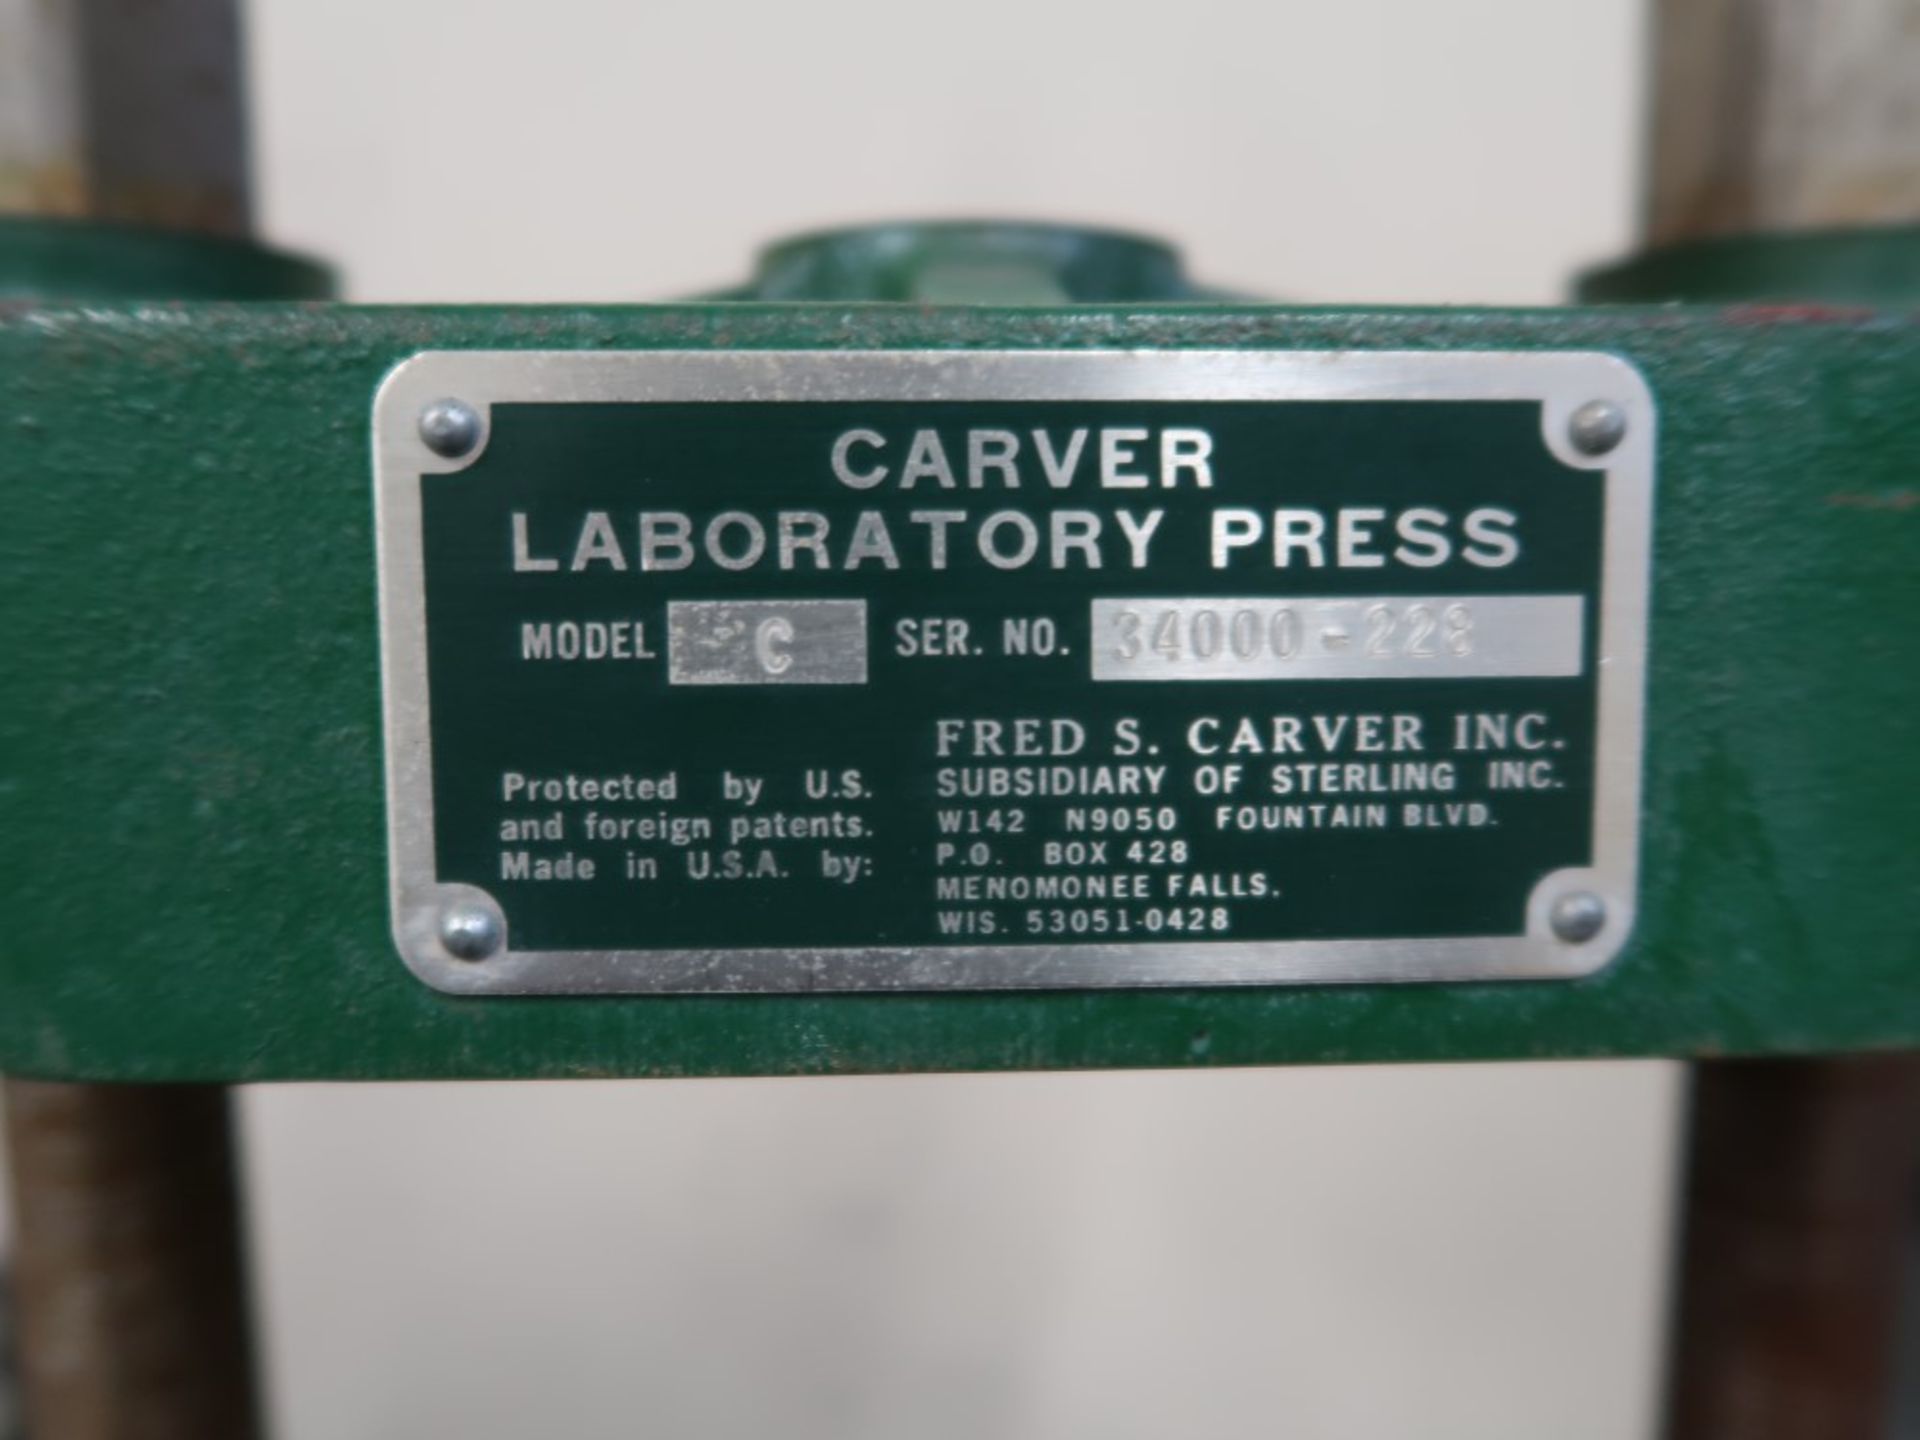 Carver Laboratory Press Model C S/N 34000-228 - Image 5 of 5